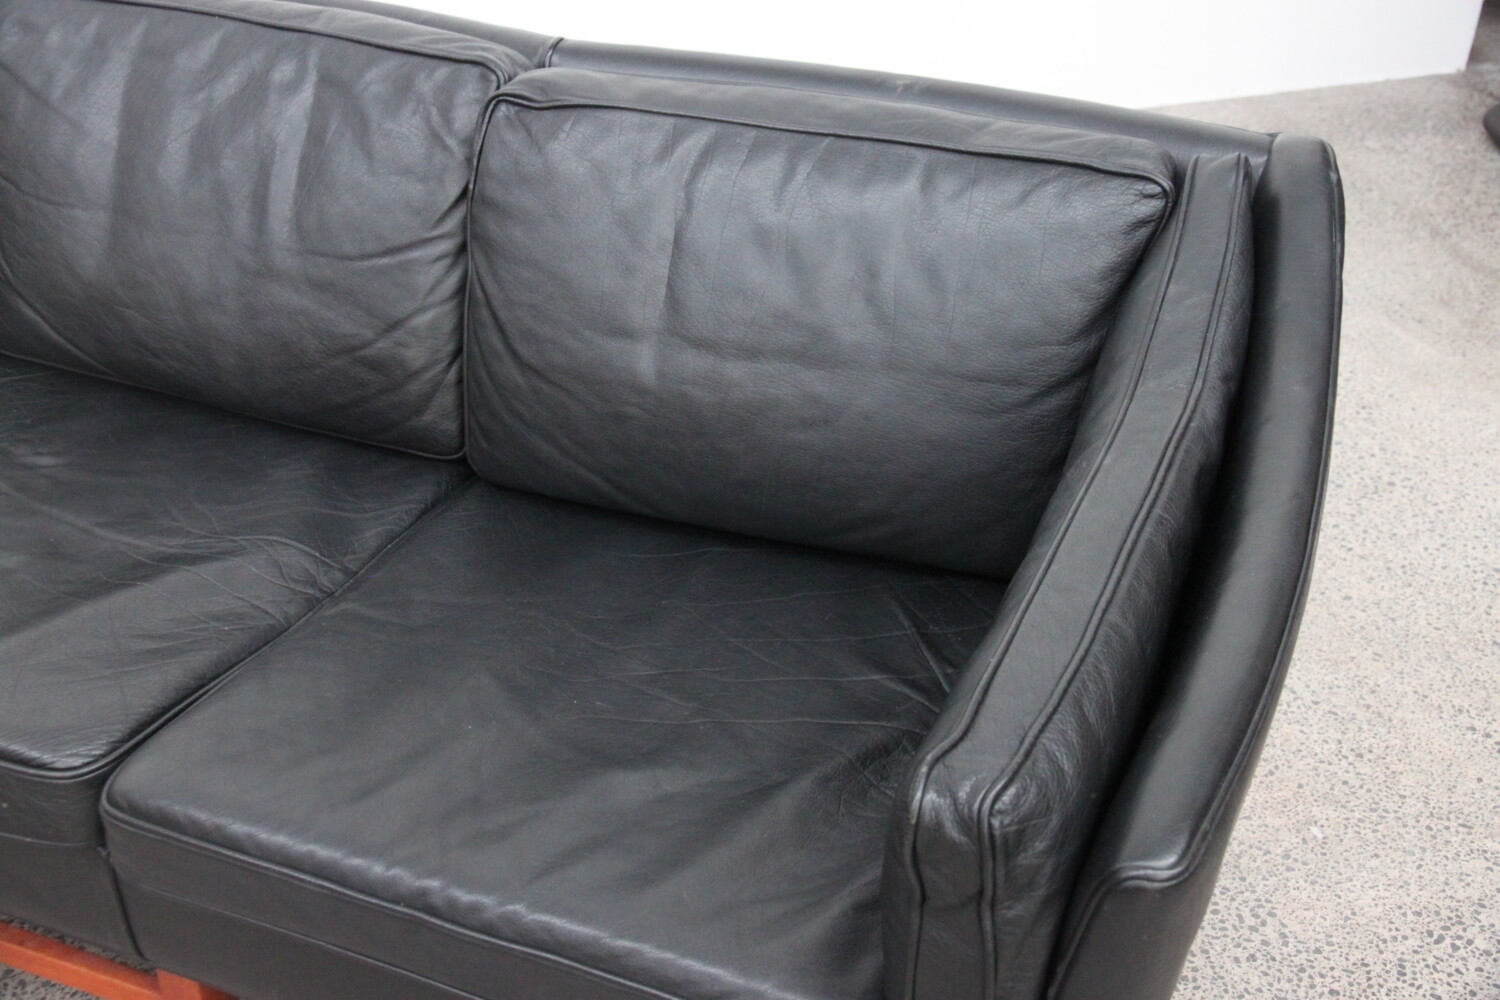 Black Sofa by Grandt Mobelfabrik sold